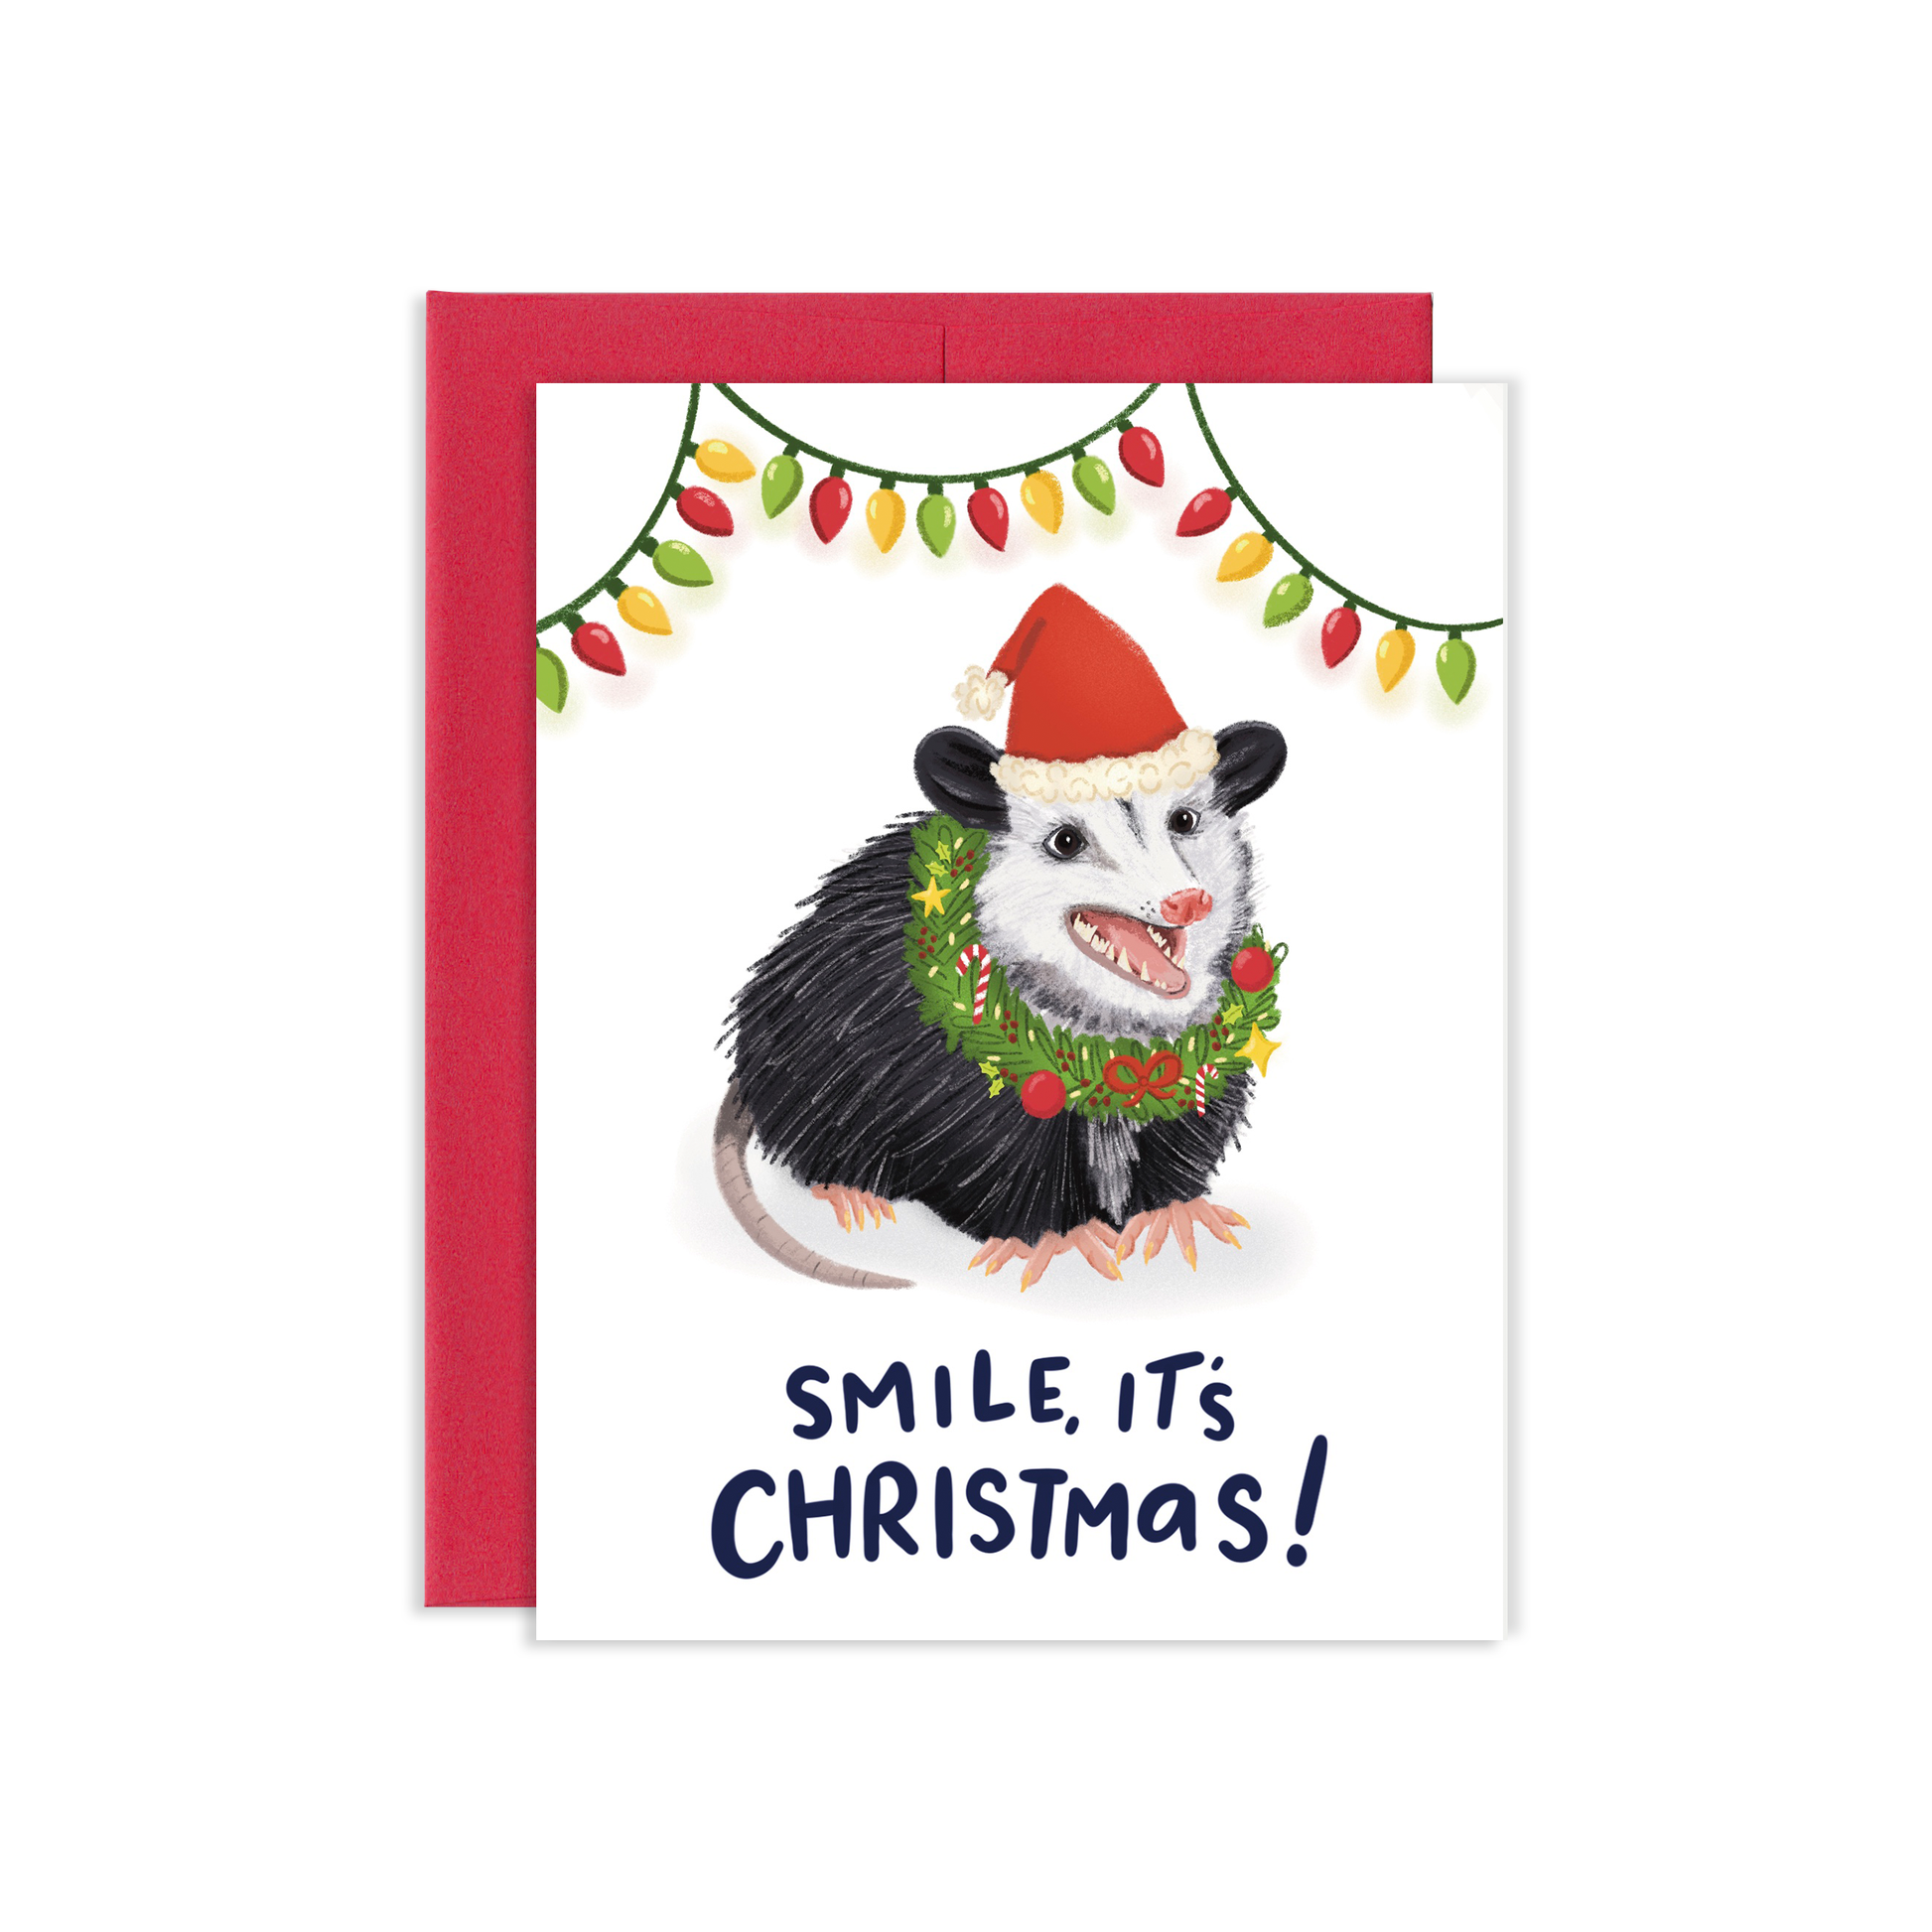 Possum Meets Santa Funny Christmas Card